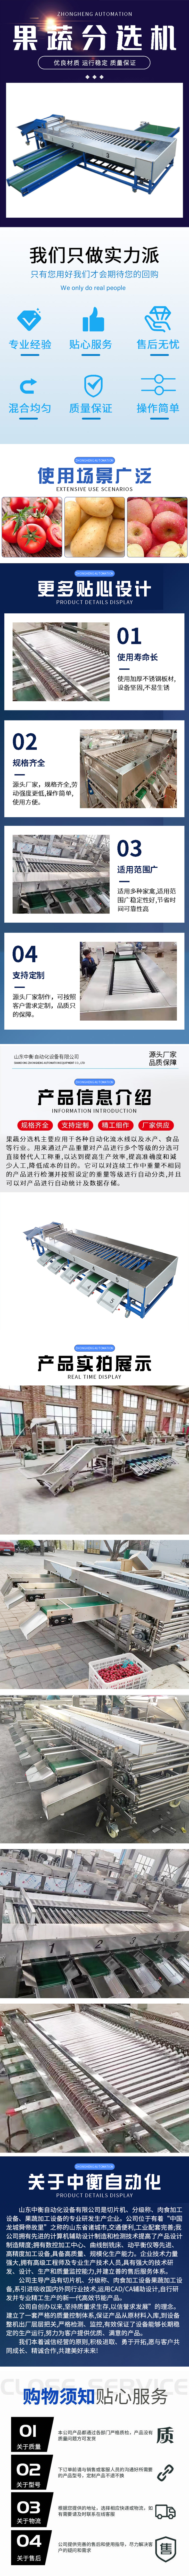 Fruit and vegetable sorting machine, potato, onion, and sweet potato sorting equipment according to size, roller sorting machine, manufacturer Zhongheng